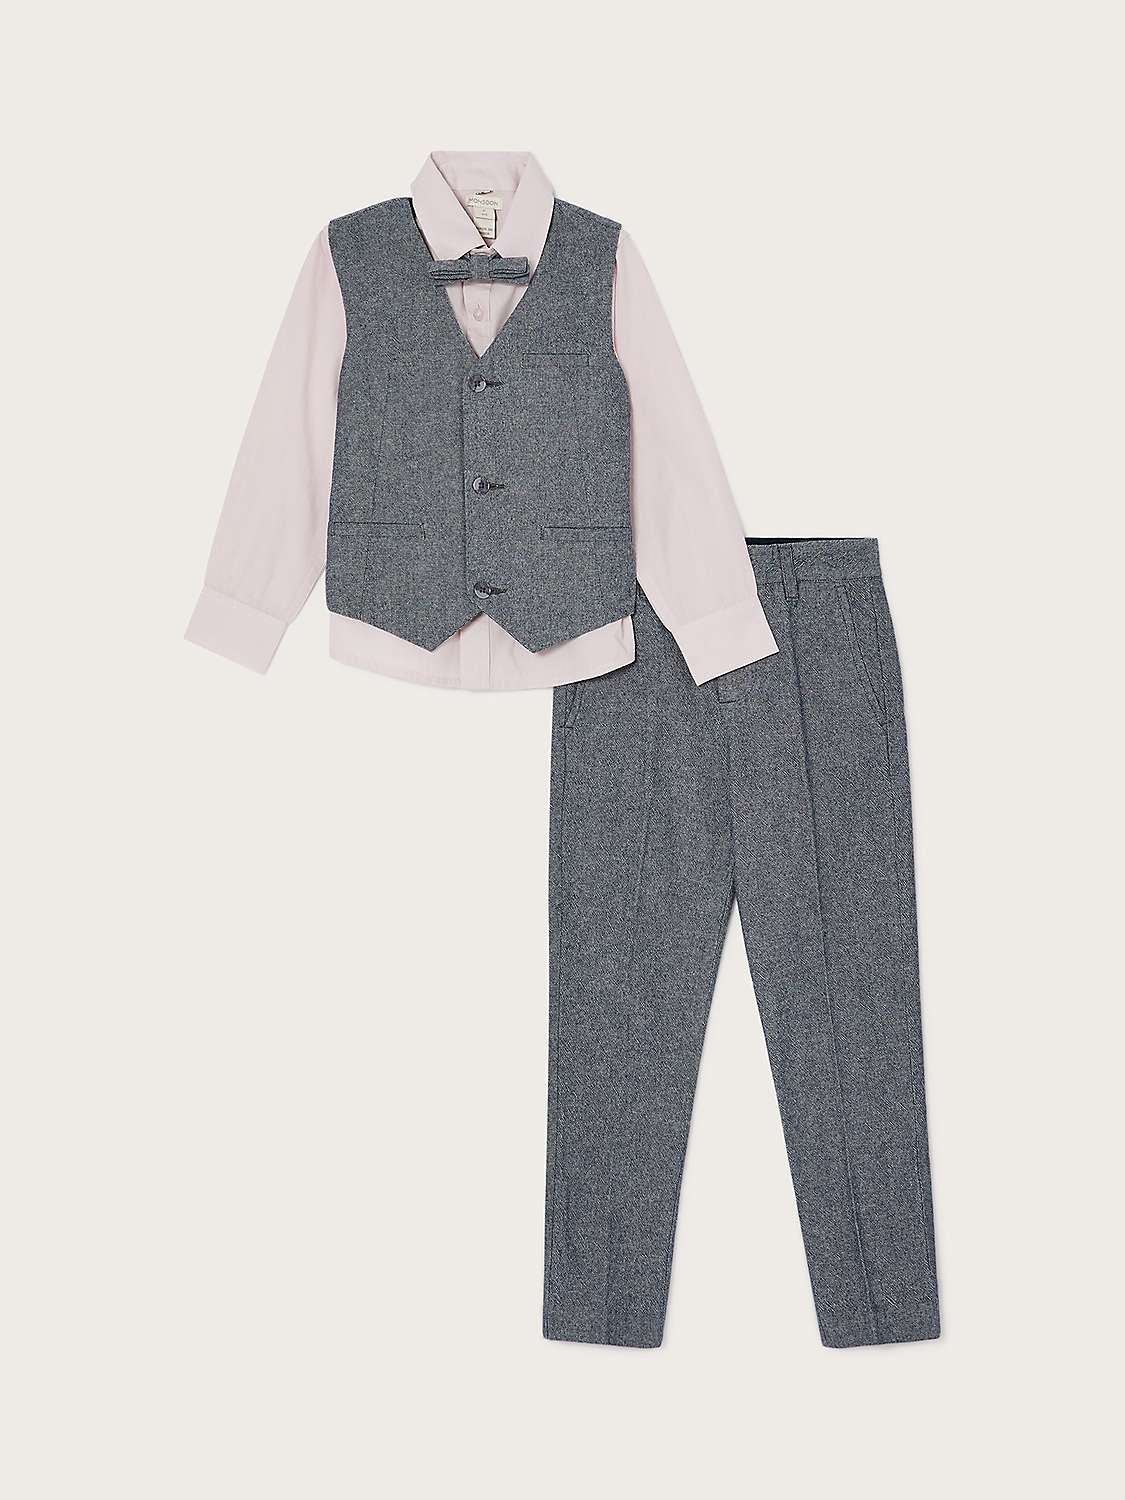 Buy Monsoon Kids' Four Piece Suit, Grey Online at johnlewis.com